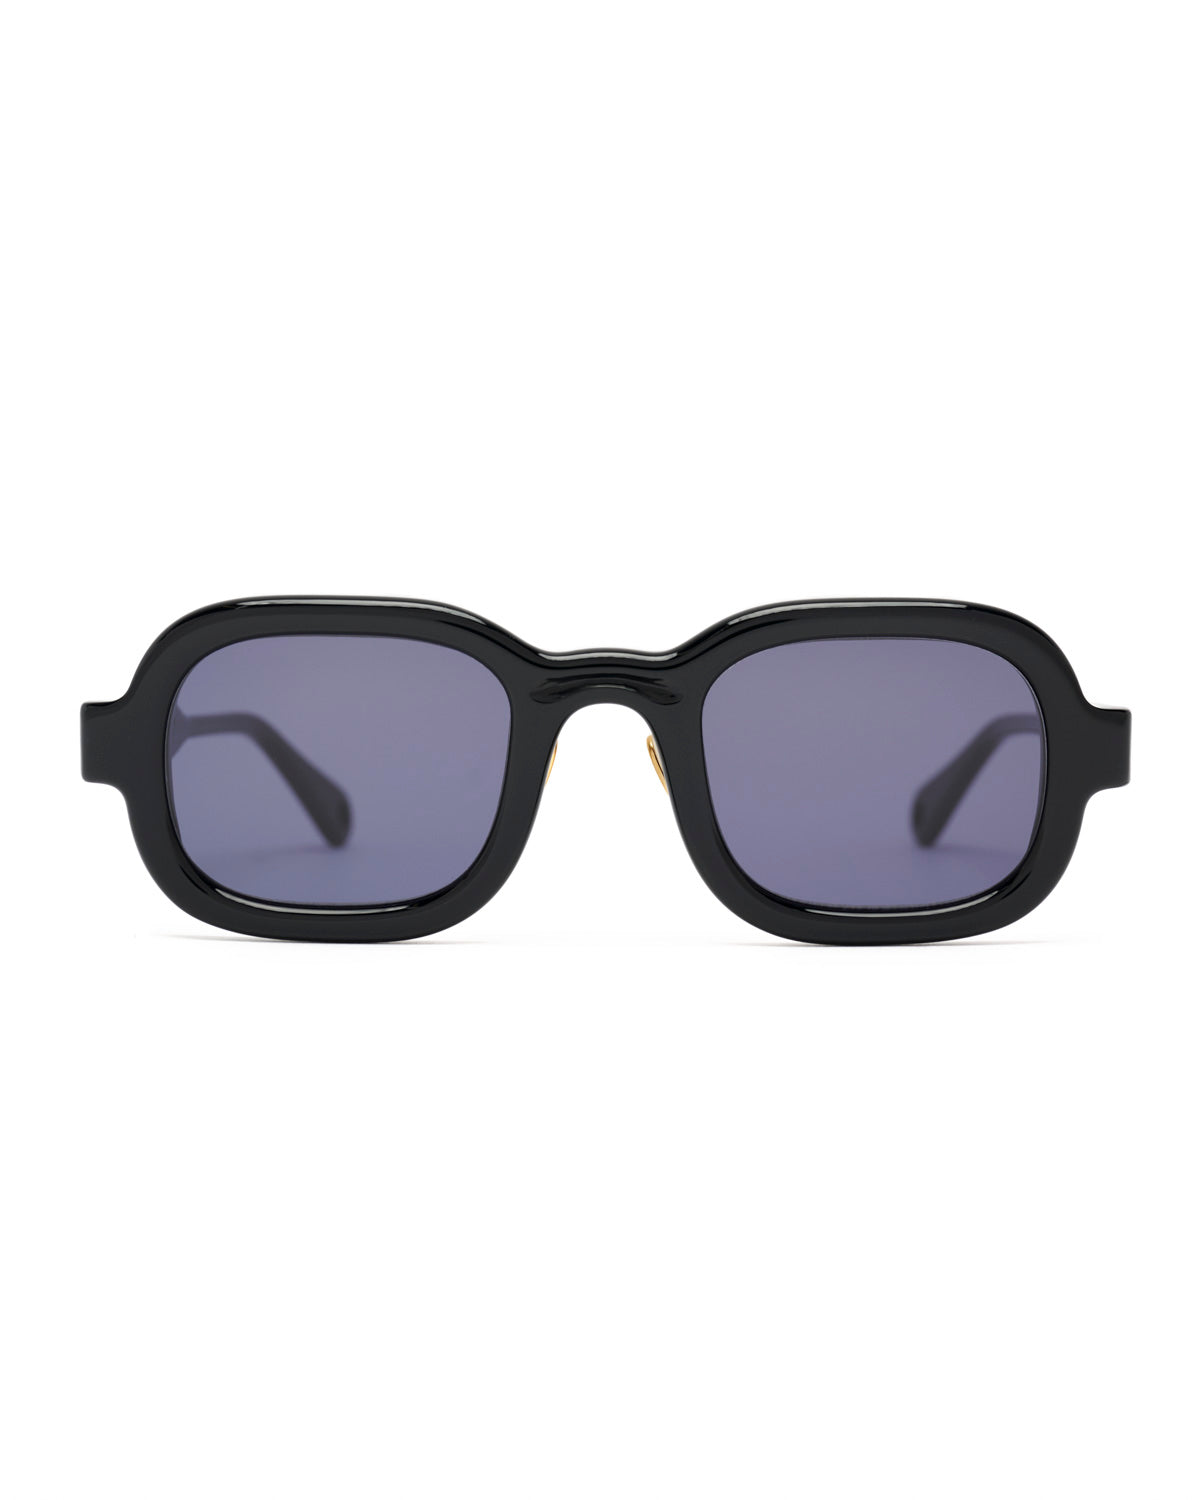 Newman Post Modern Primitive Eye Protection - Black/Blue 1